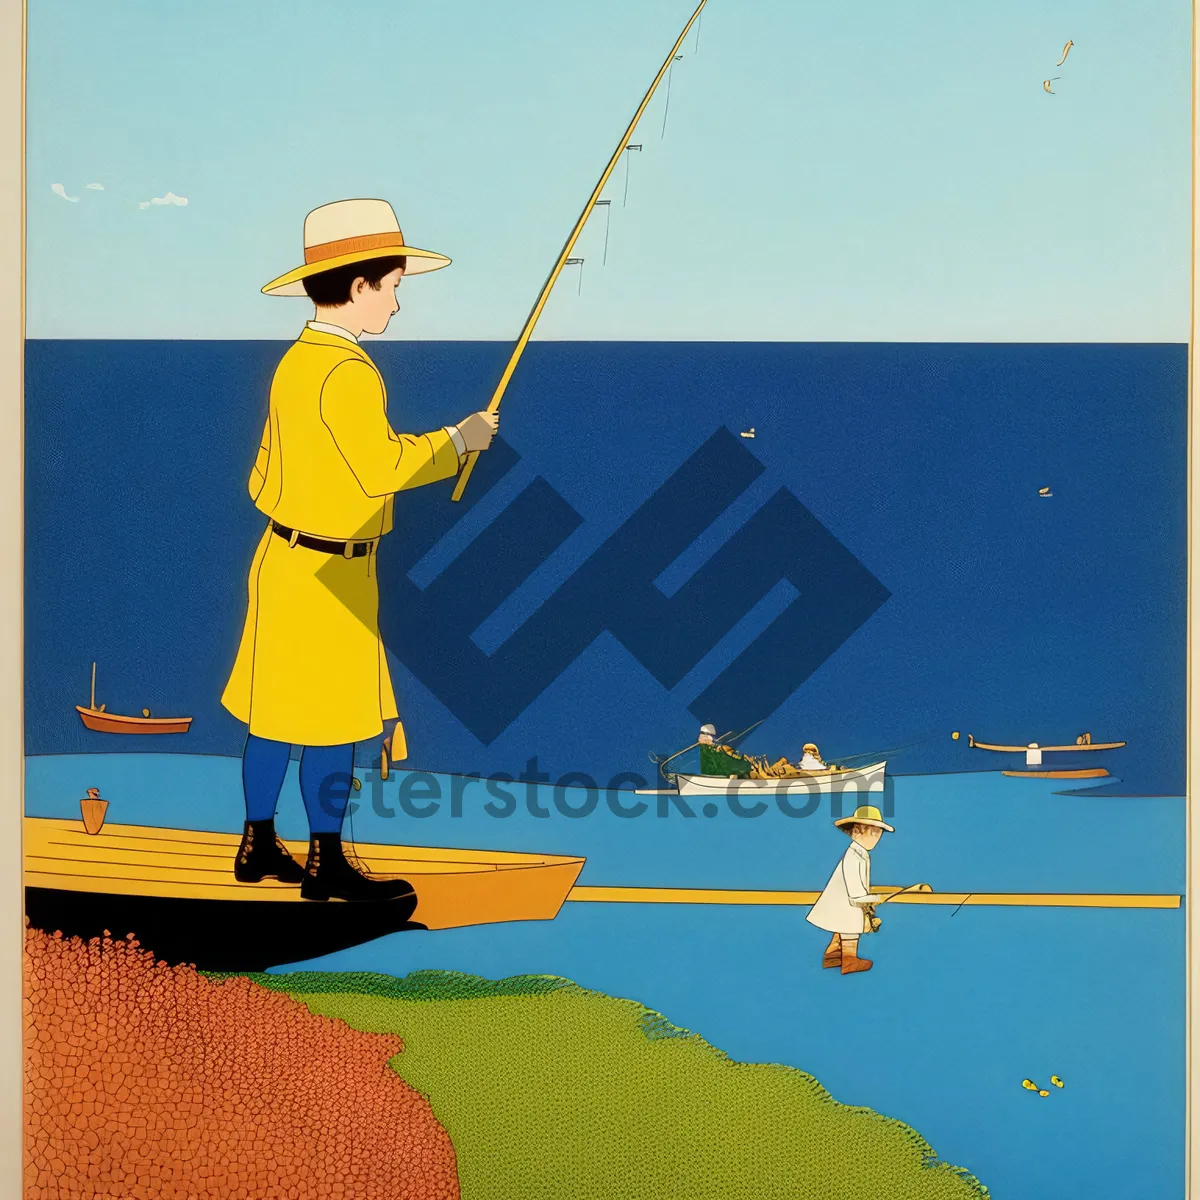 Picture of Swinging golfer under blue skies